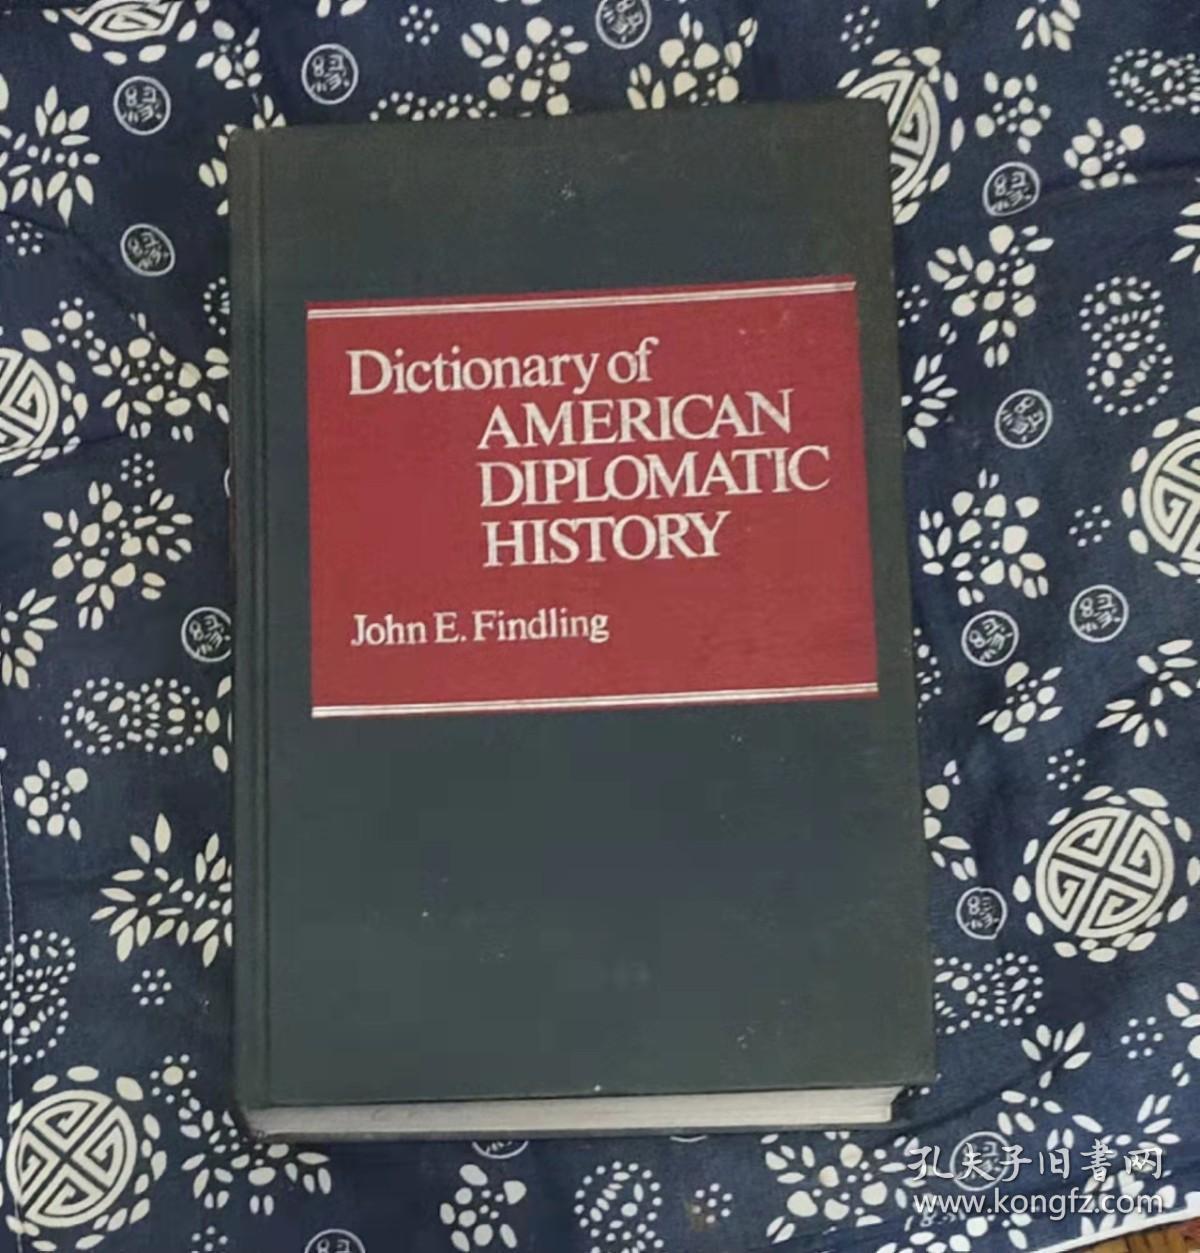 Dictionaryof AMERICAN DIPLOMATIC HISTORY